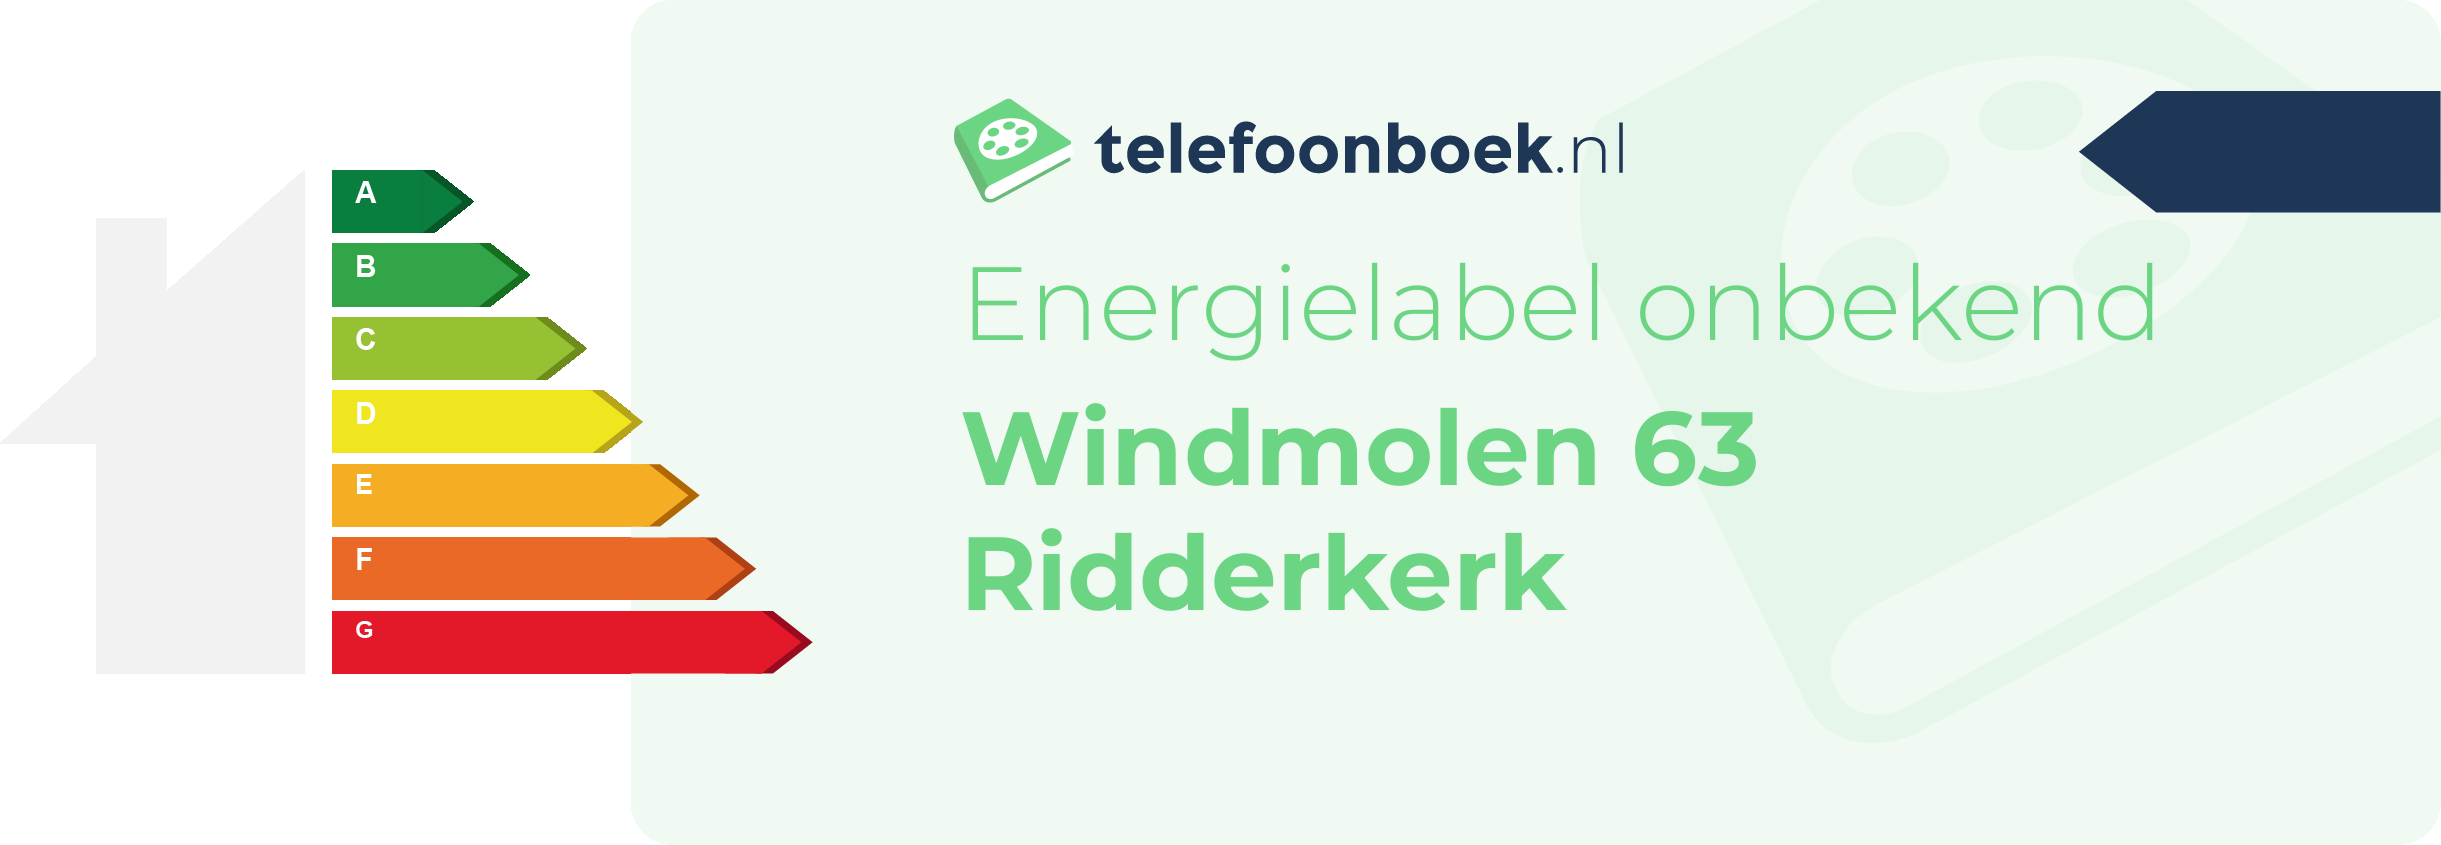 Energielabel Windmolen 63 Ridderkerk